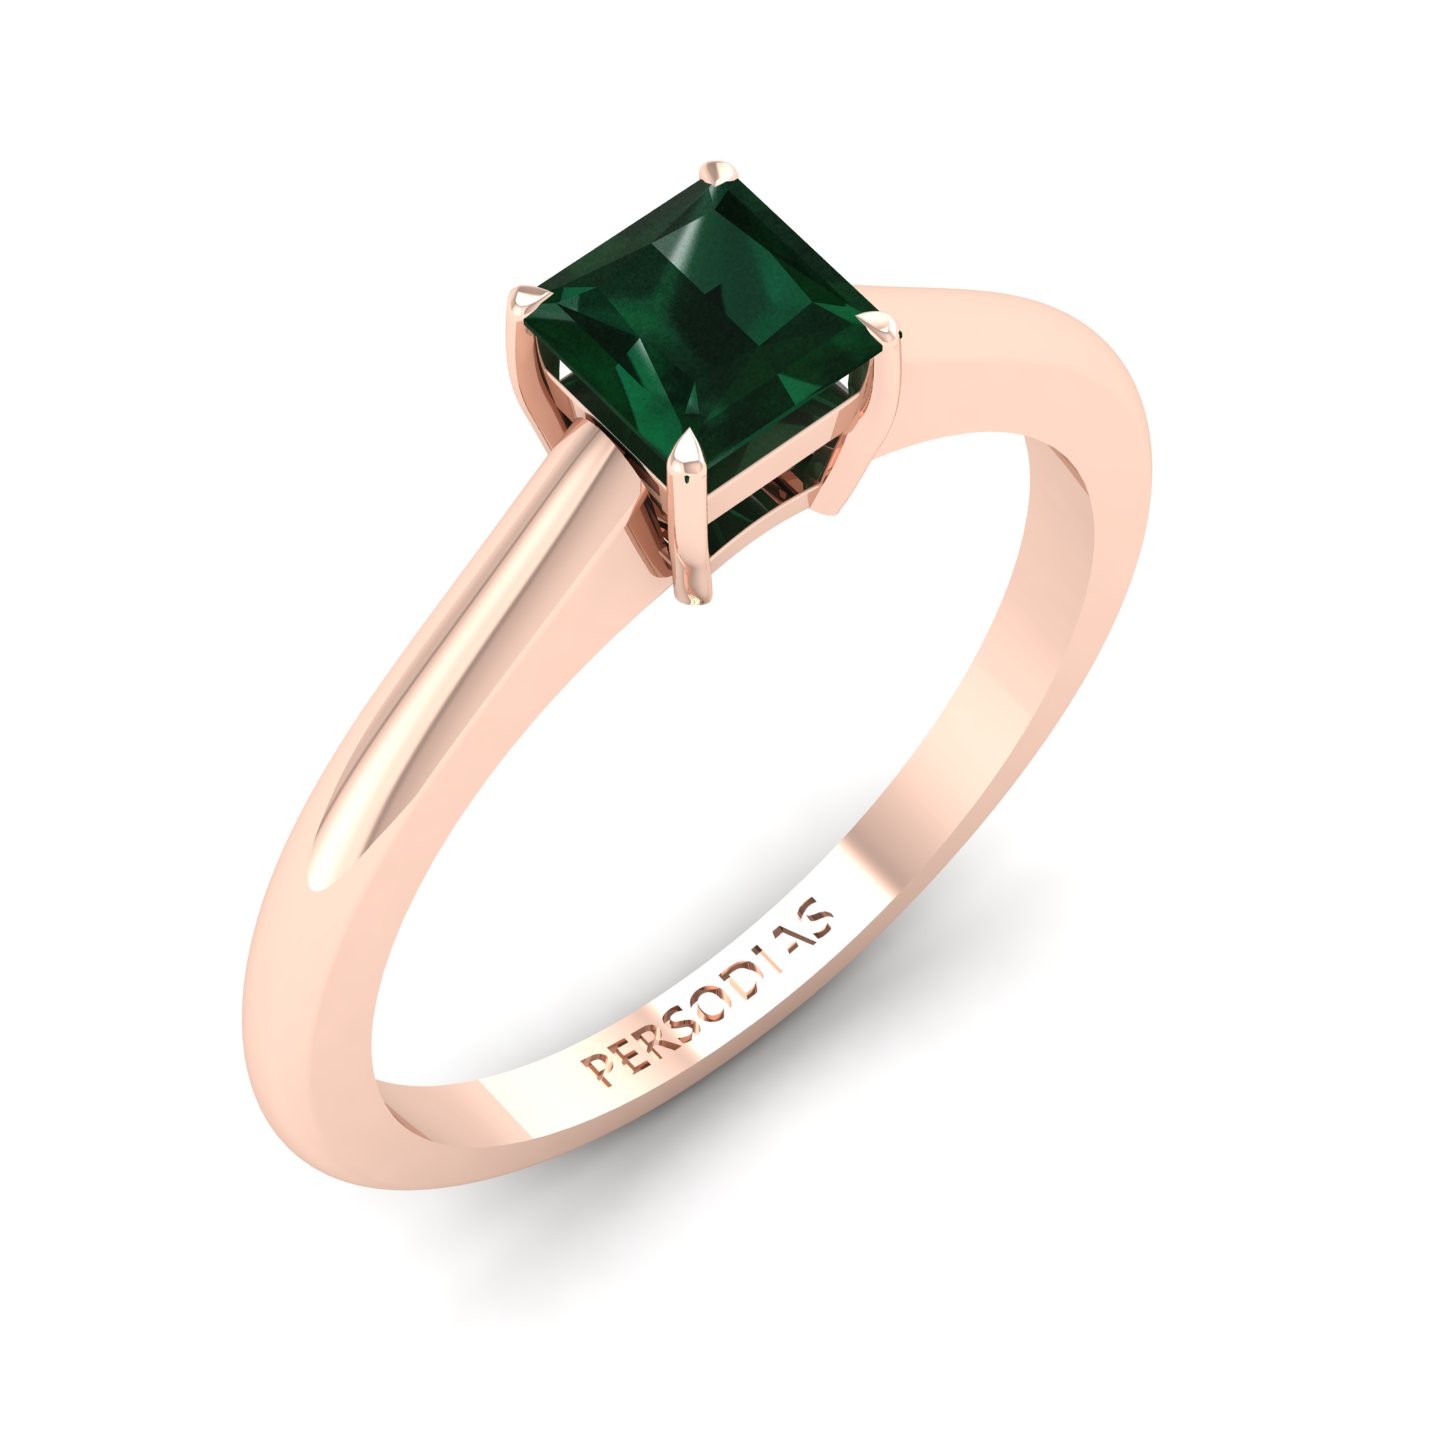 Solitaire Engagement Ring Semi Precious Stone Princess Cut 0.50 CT Diana